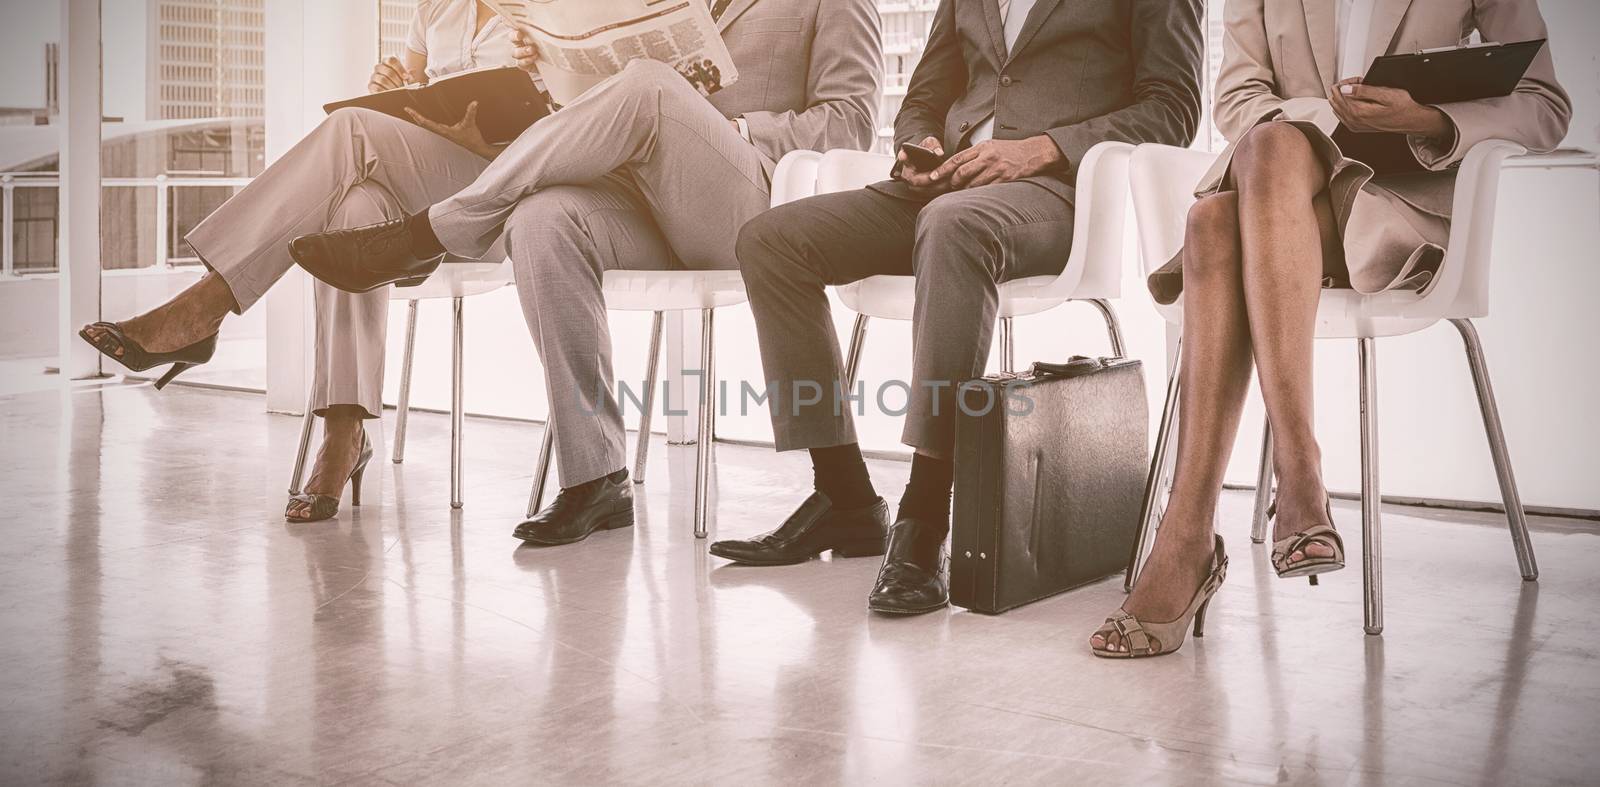 Business people sitting in waiting room by Wavebreakmedia